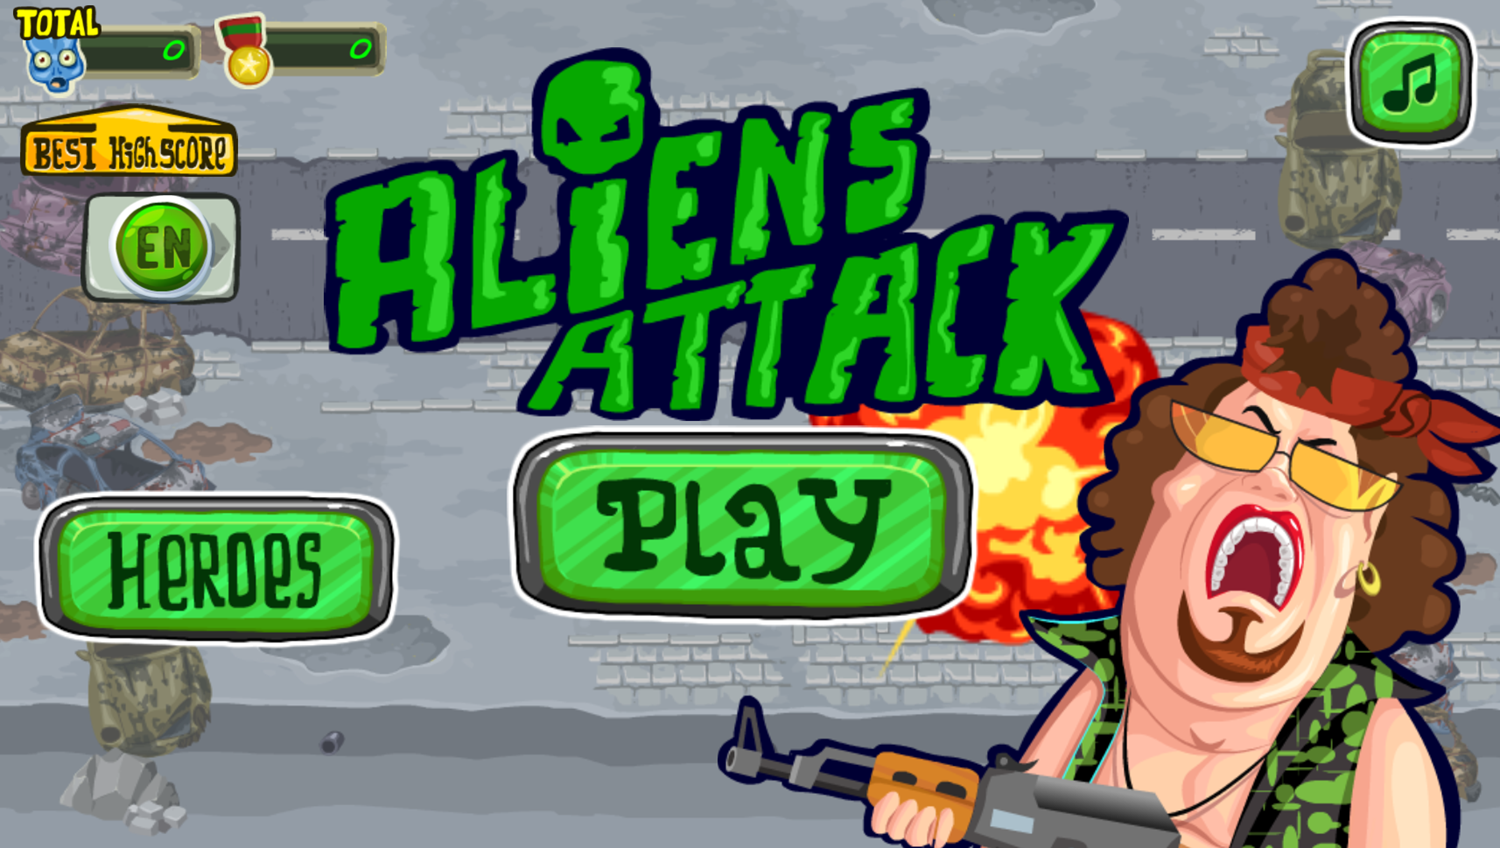 Aliens Attack Game Welcome Screen Screenshot.